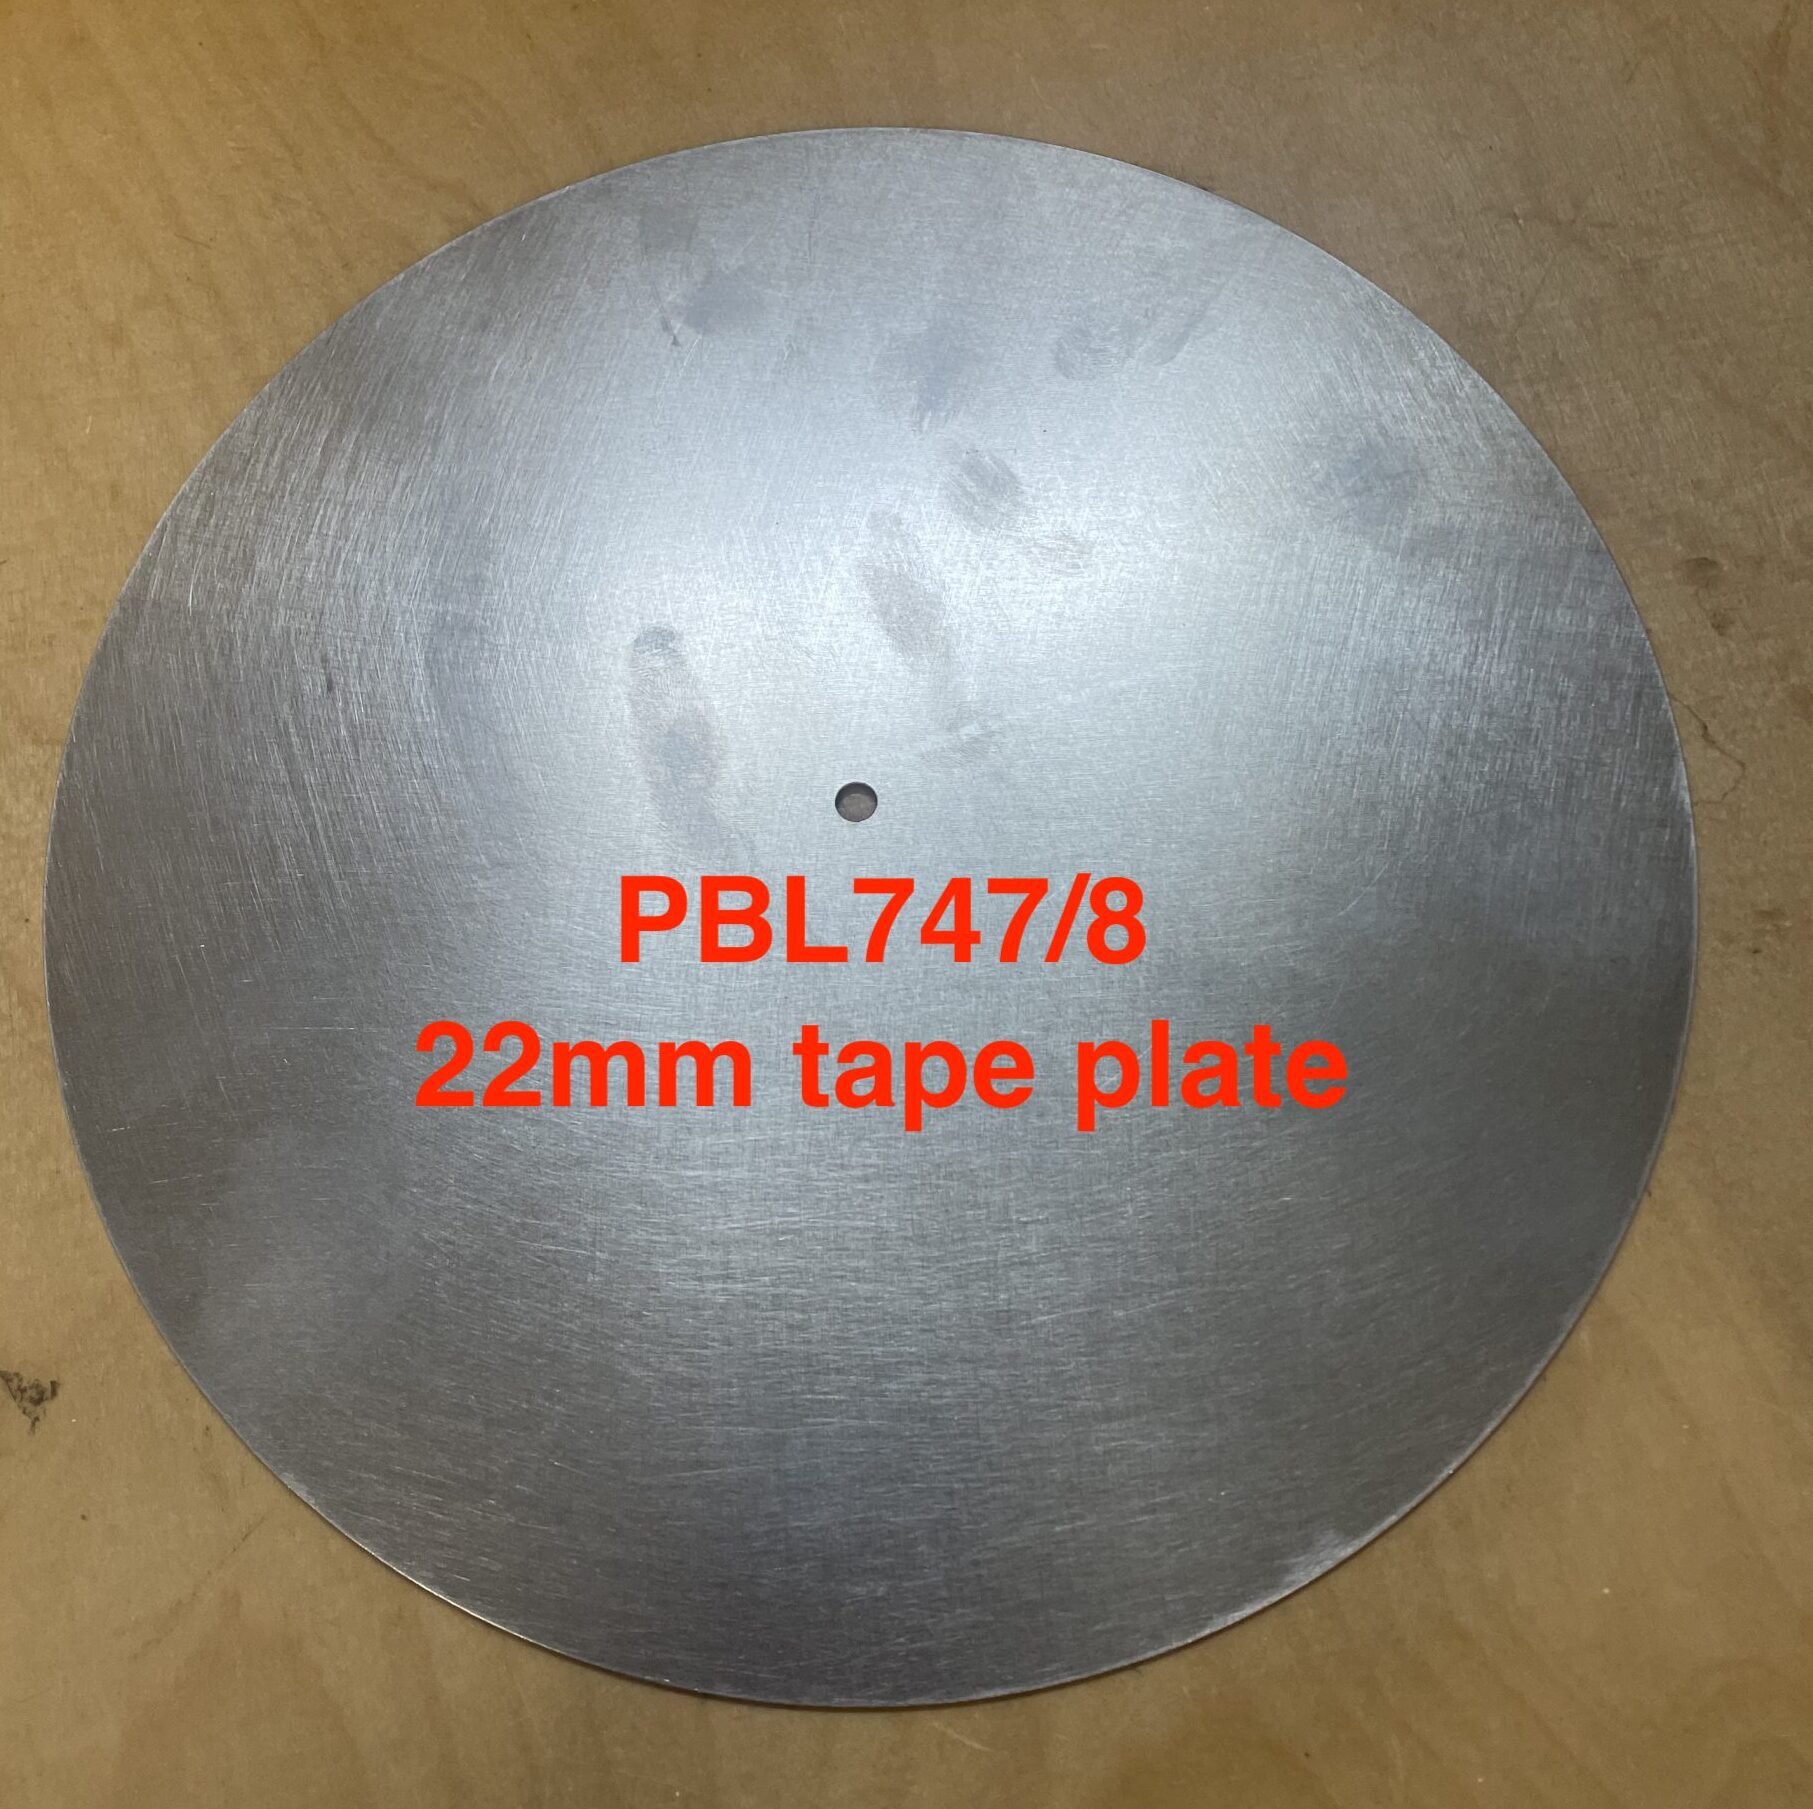 PBL747/8 22mm tape plate